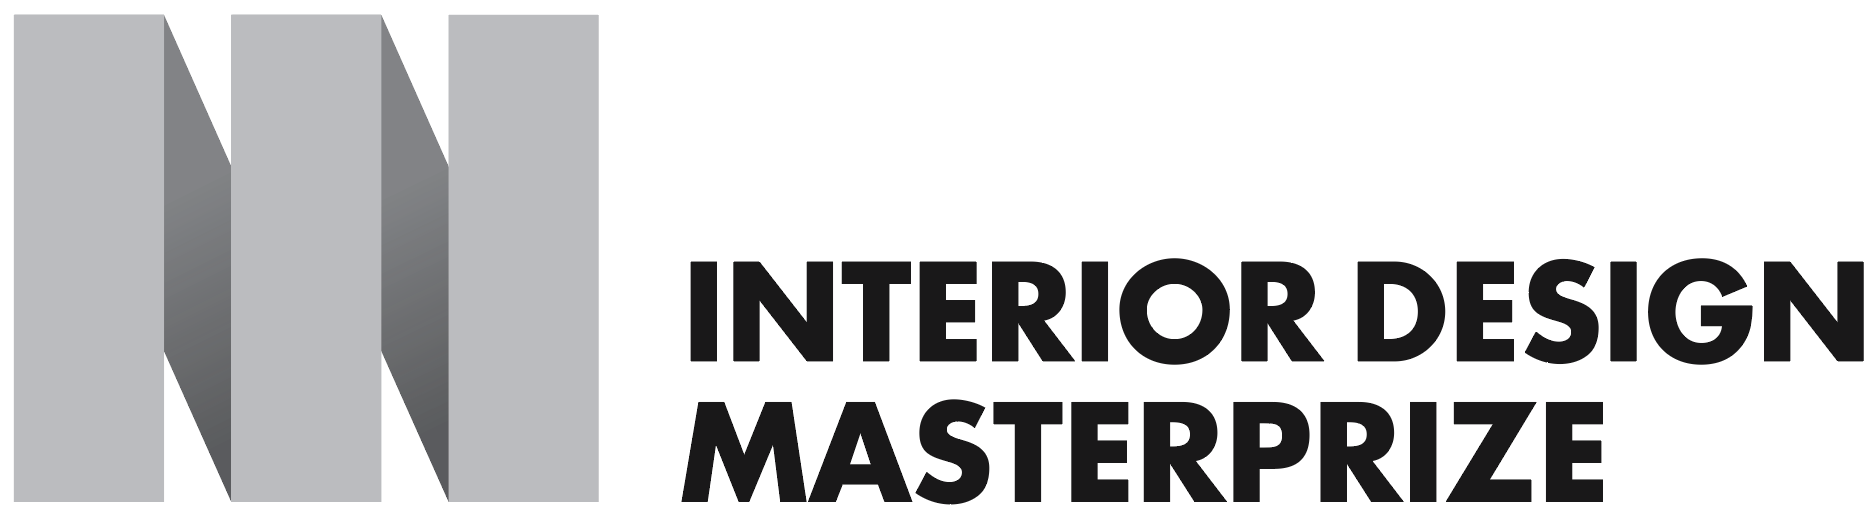 Interior Design MasterPrize Award